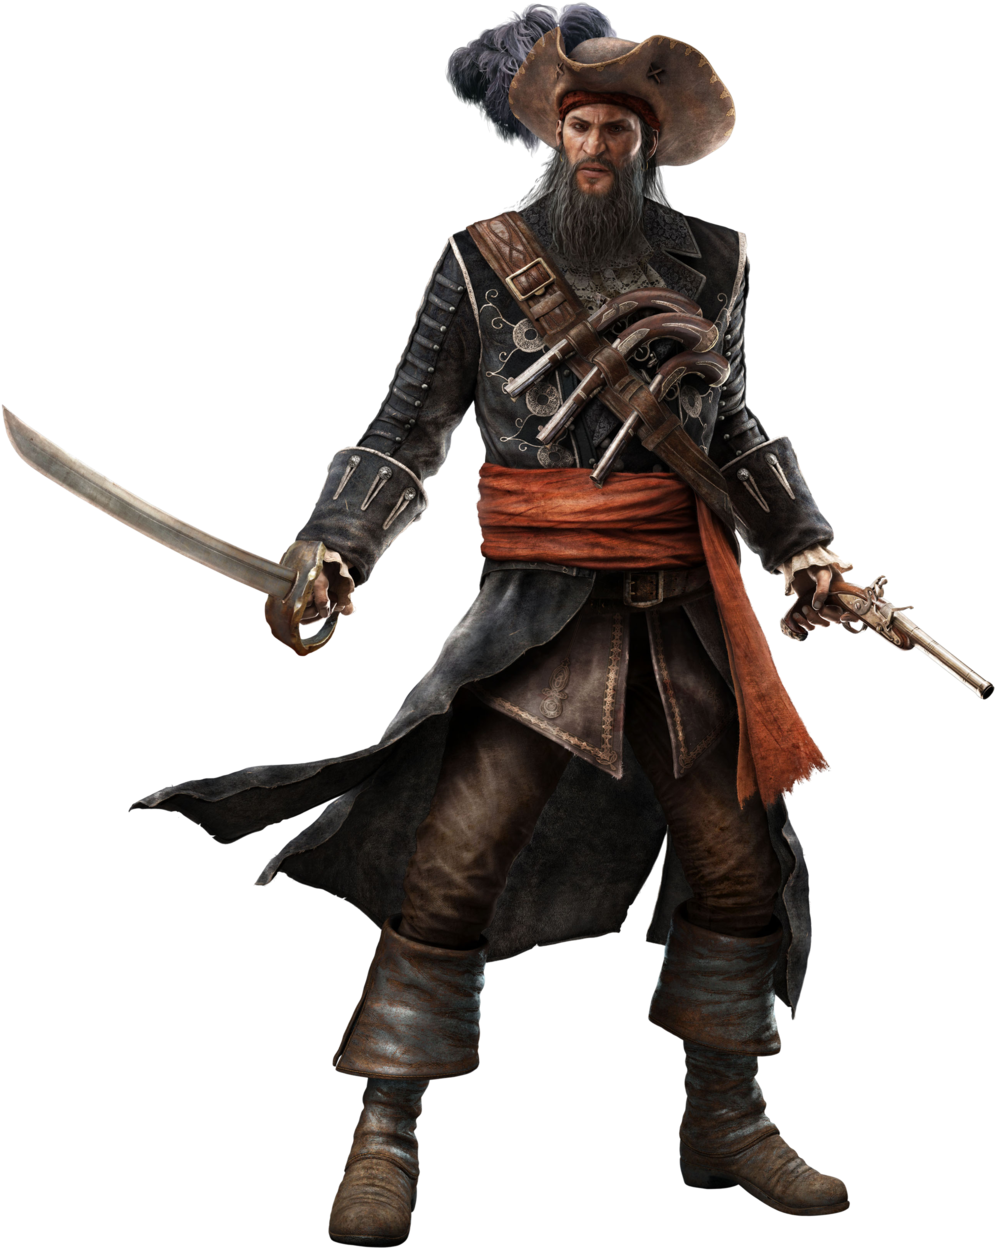 Pirate - Assassins Creed Black Beard (1024x1280)